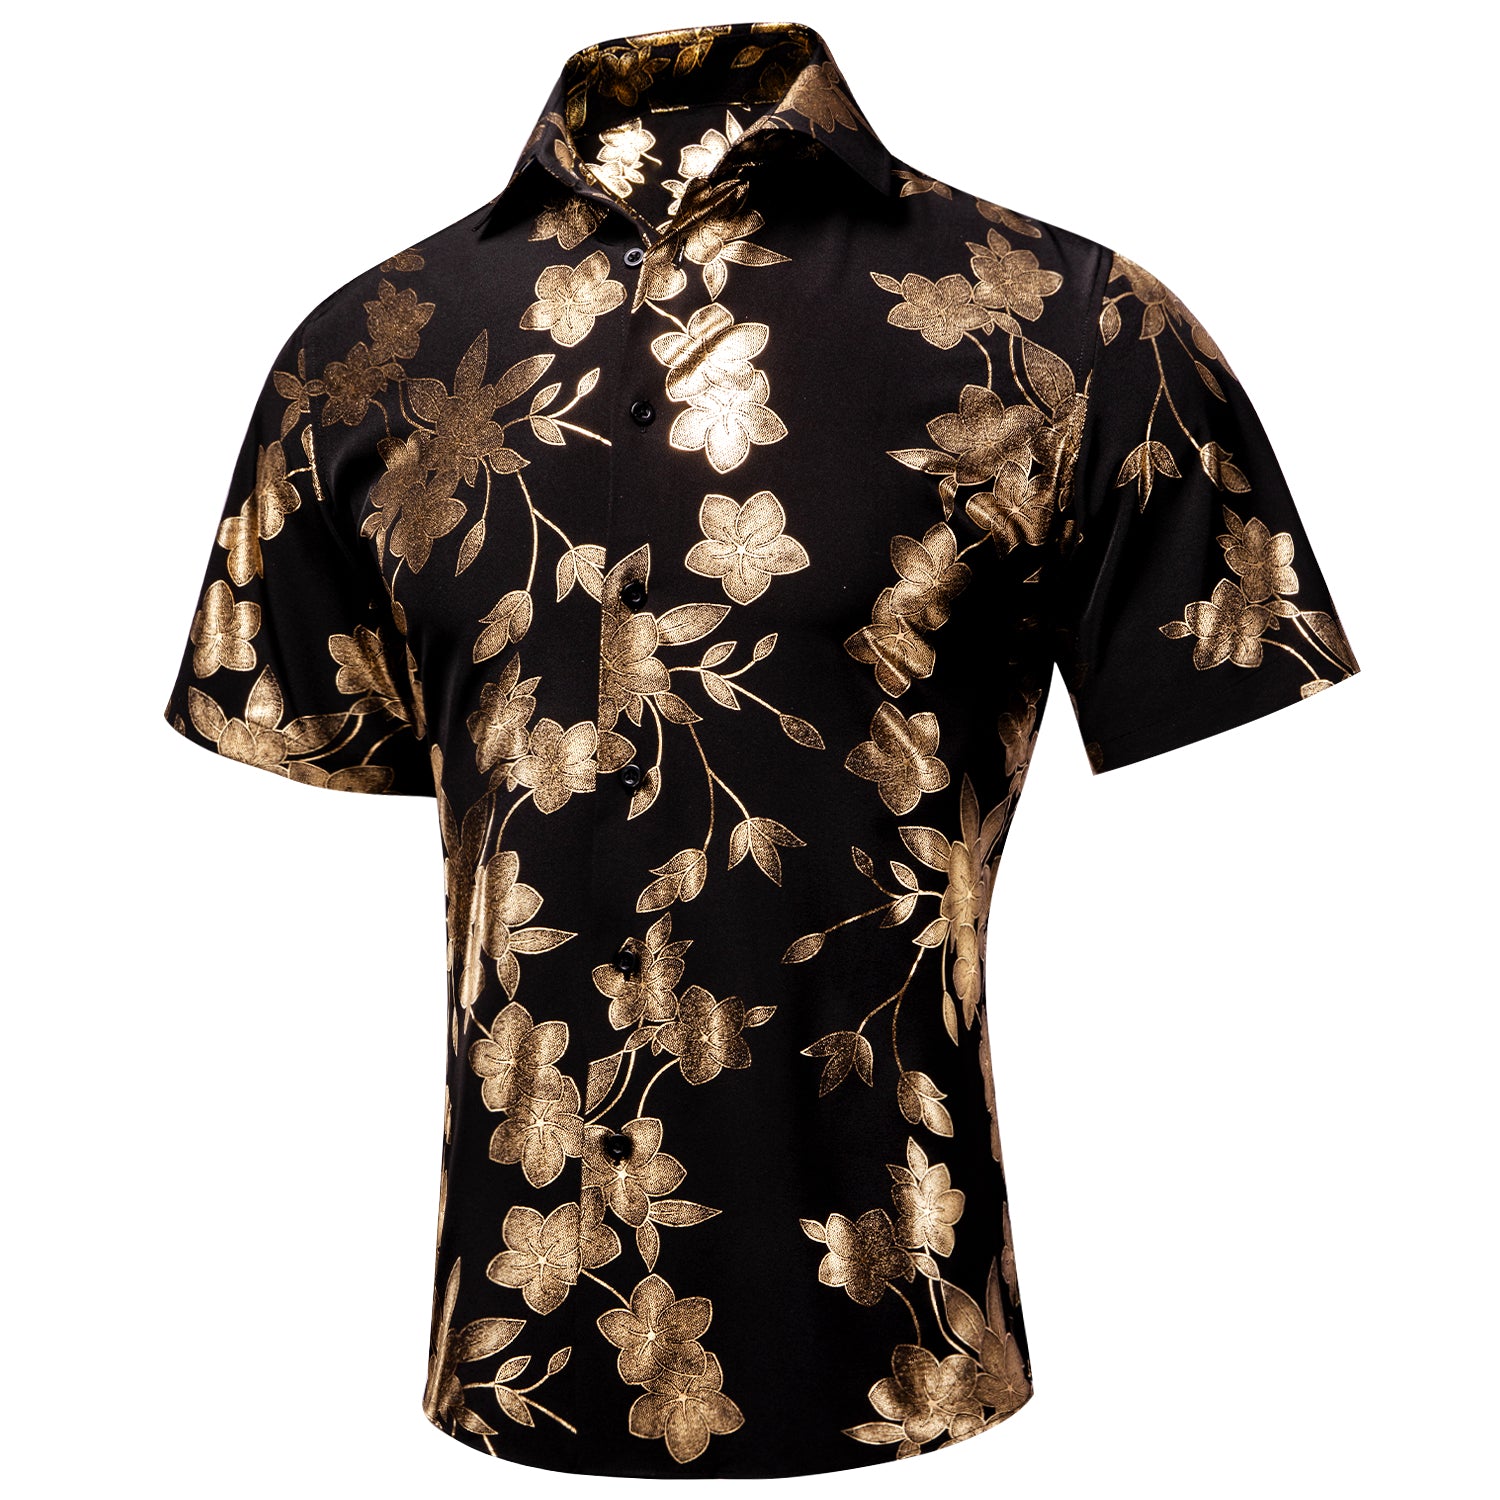 New Black Wheat Floral Men's Short Sleeve Shirt